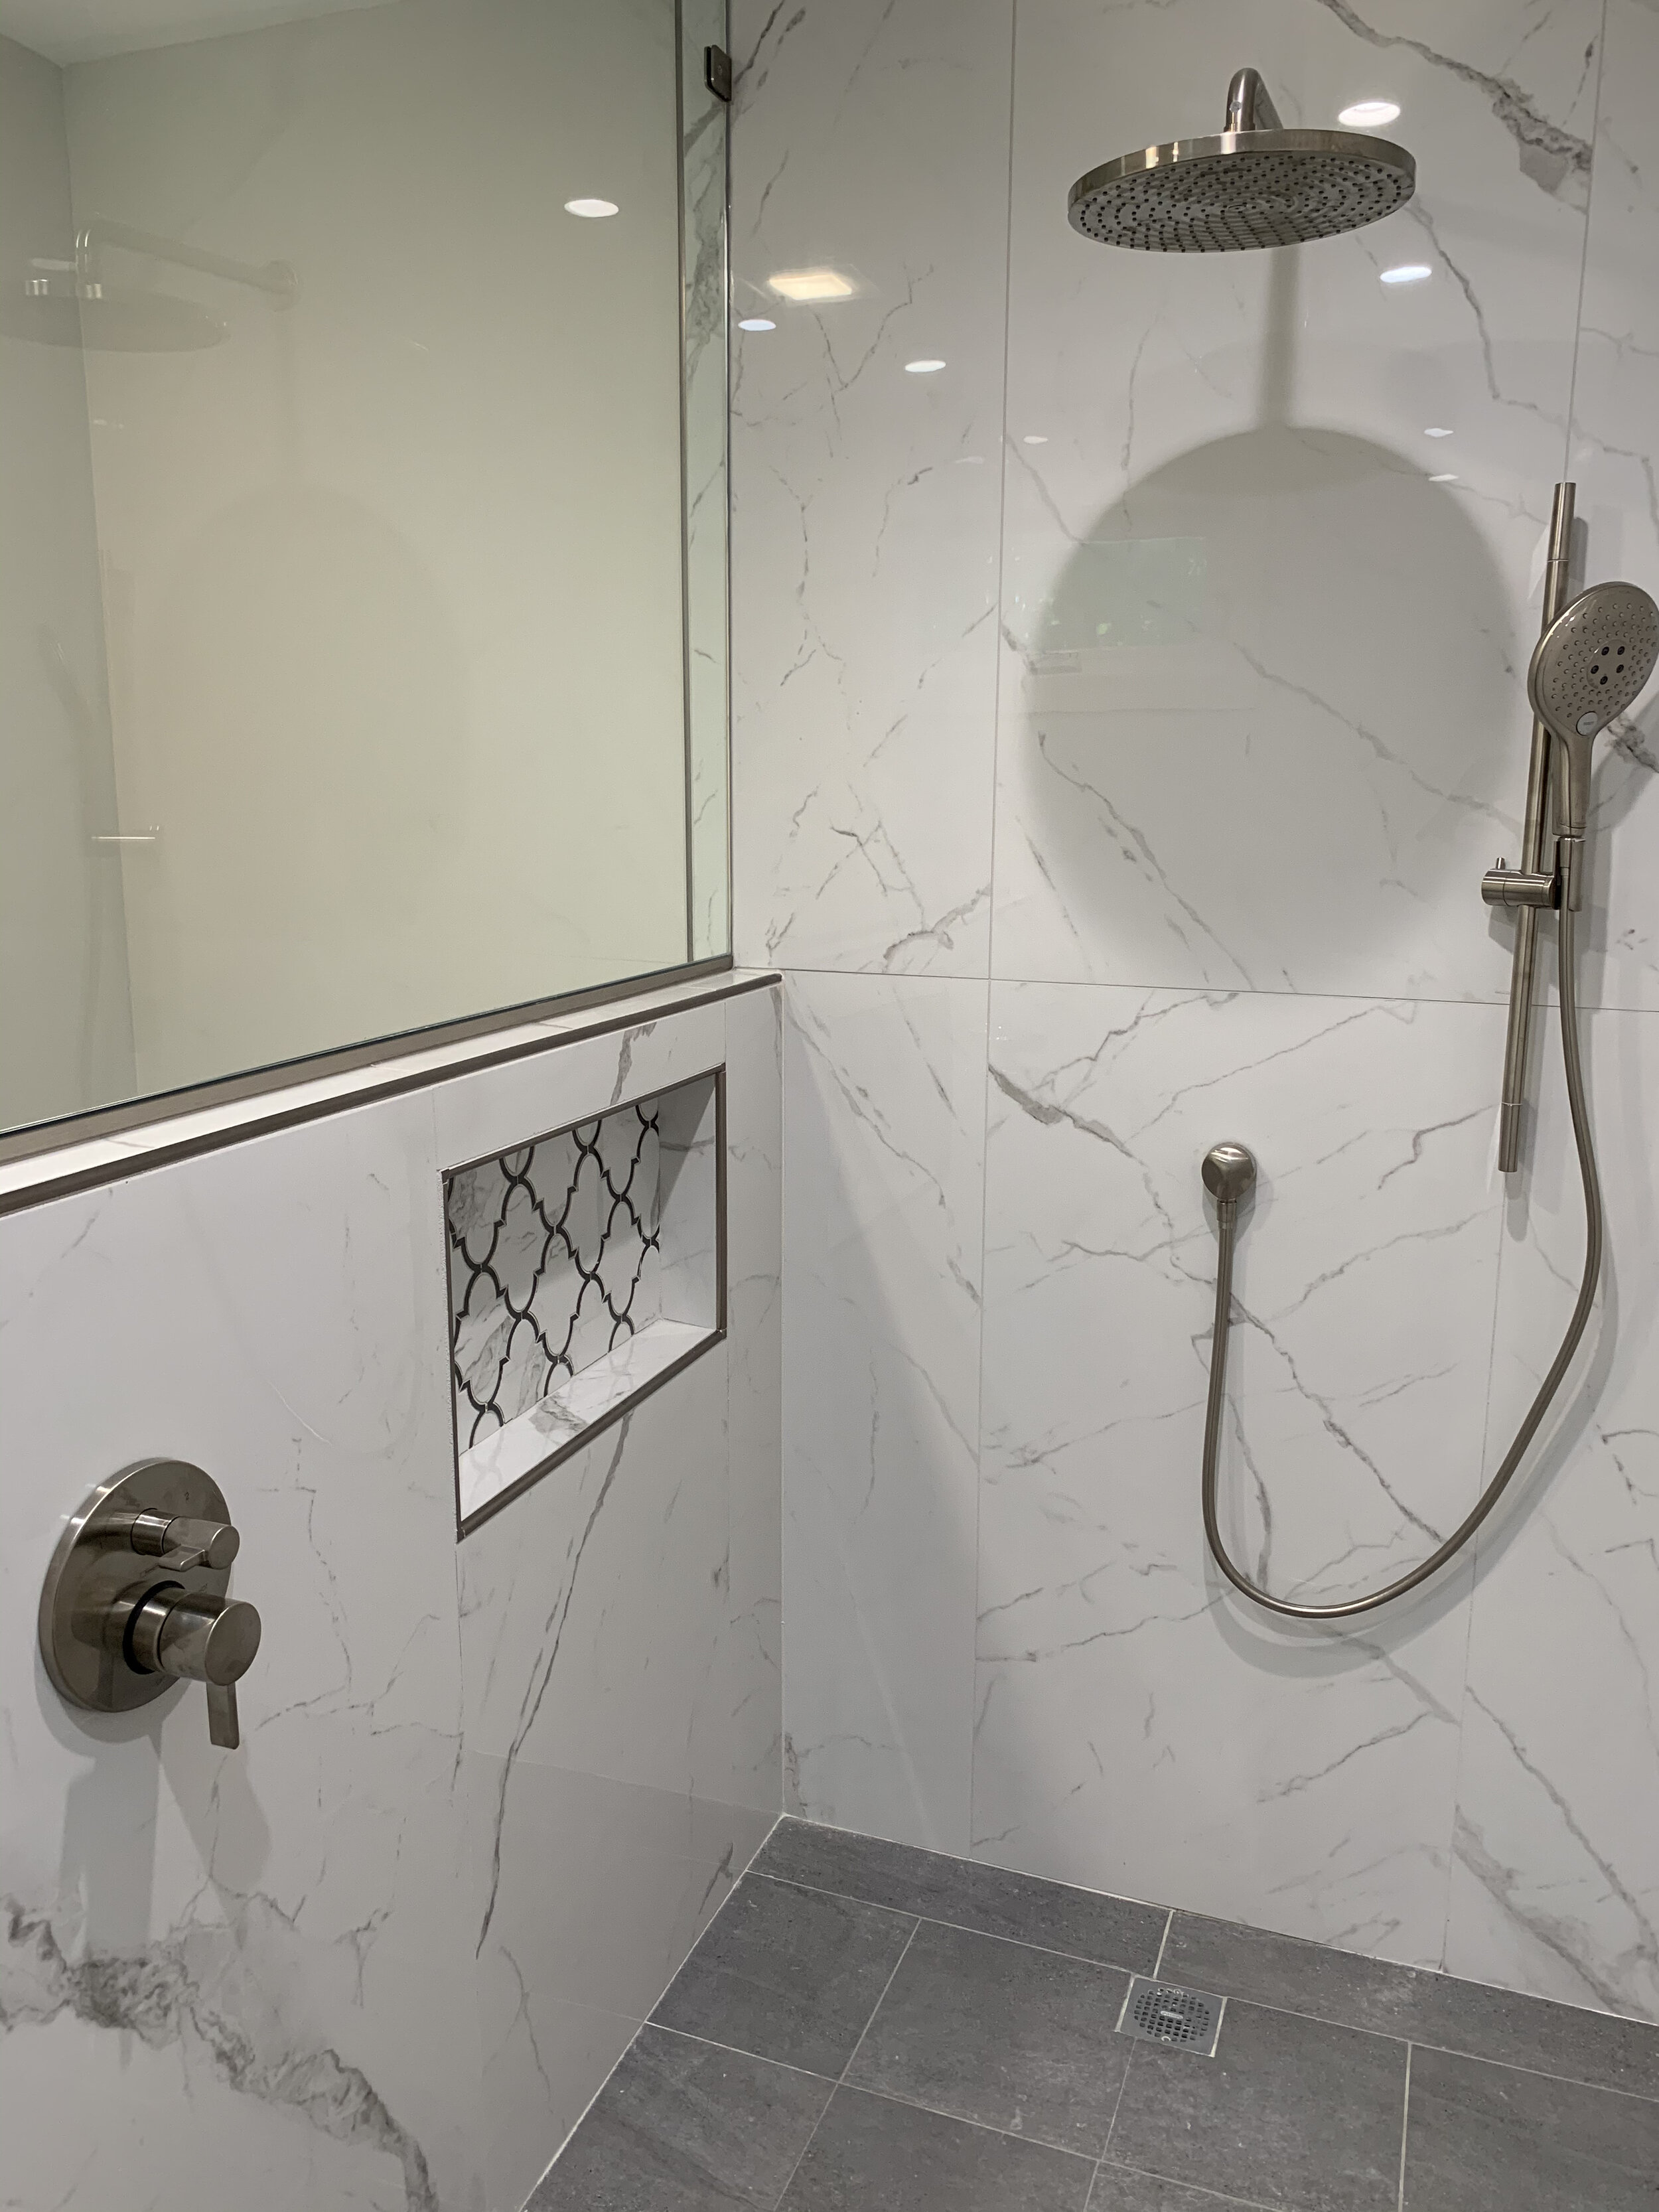 Shaw Remodeling - tiled bathroom remodel renovation in Niantic CT - after photo (4).jpg